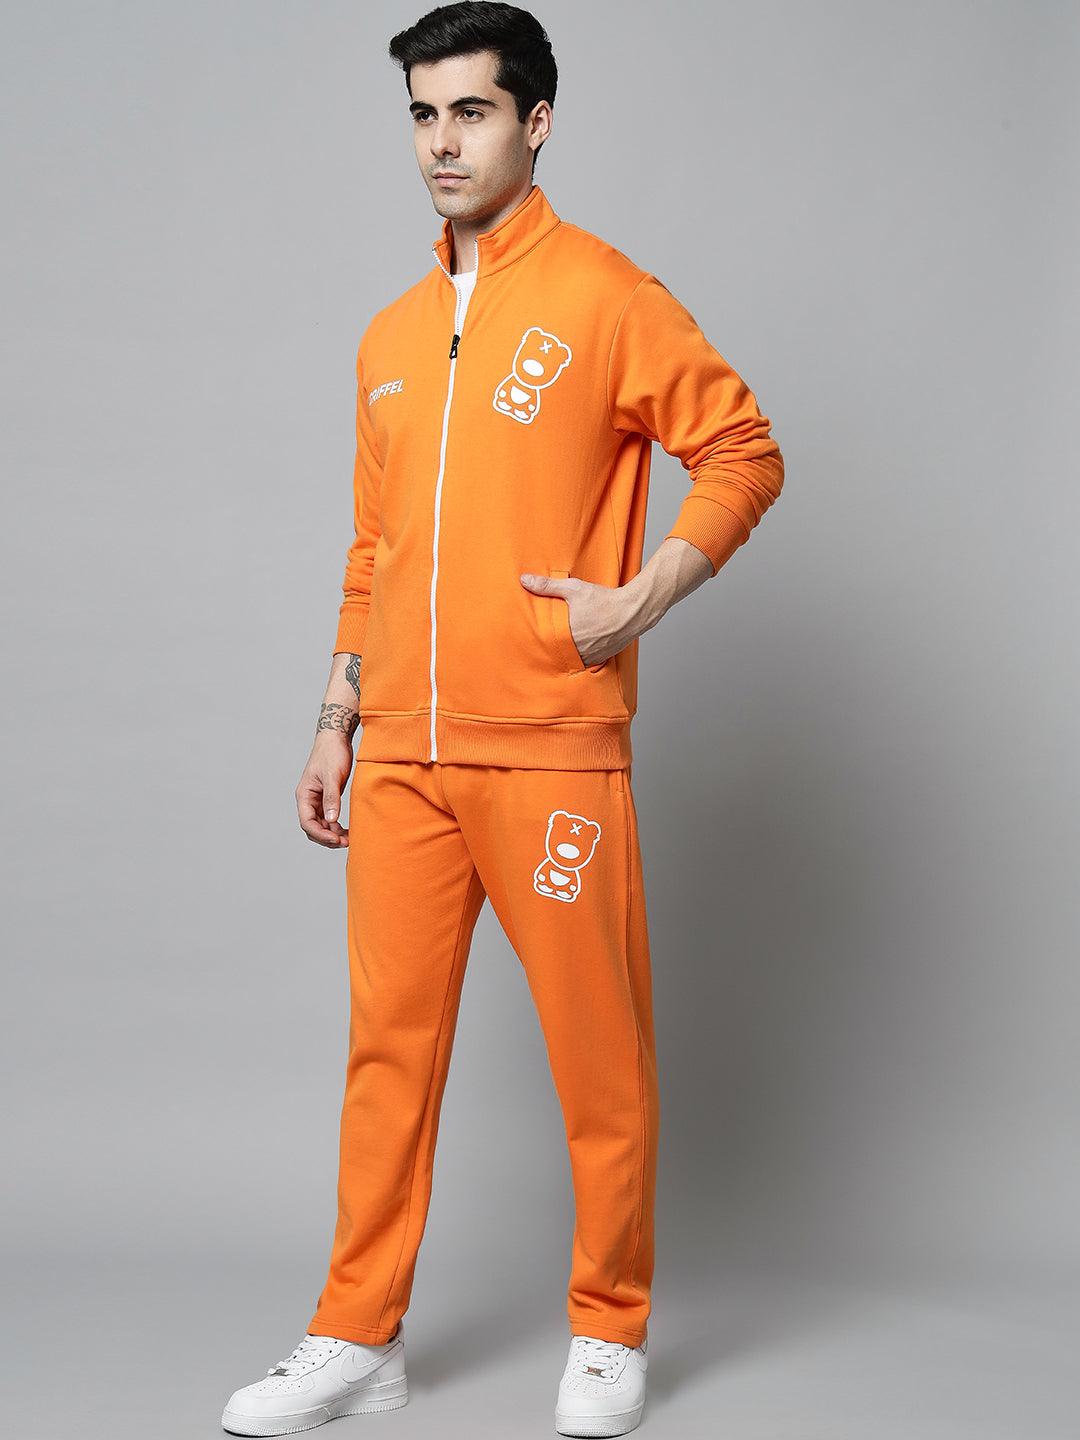 Griffel Men's Front Logo Print Fleece Zipper and Jogger Full set Orange Tracksuit - griffel